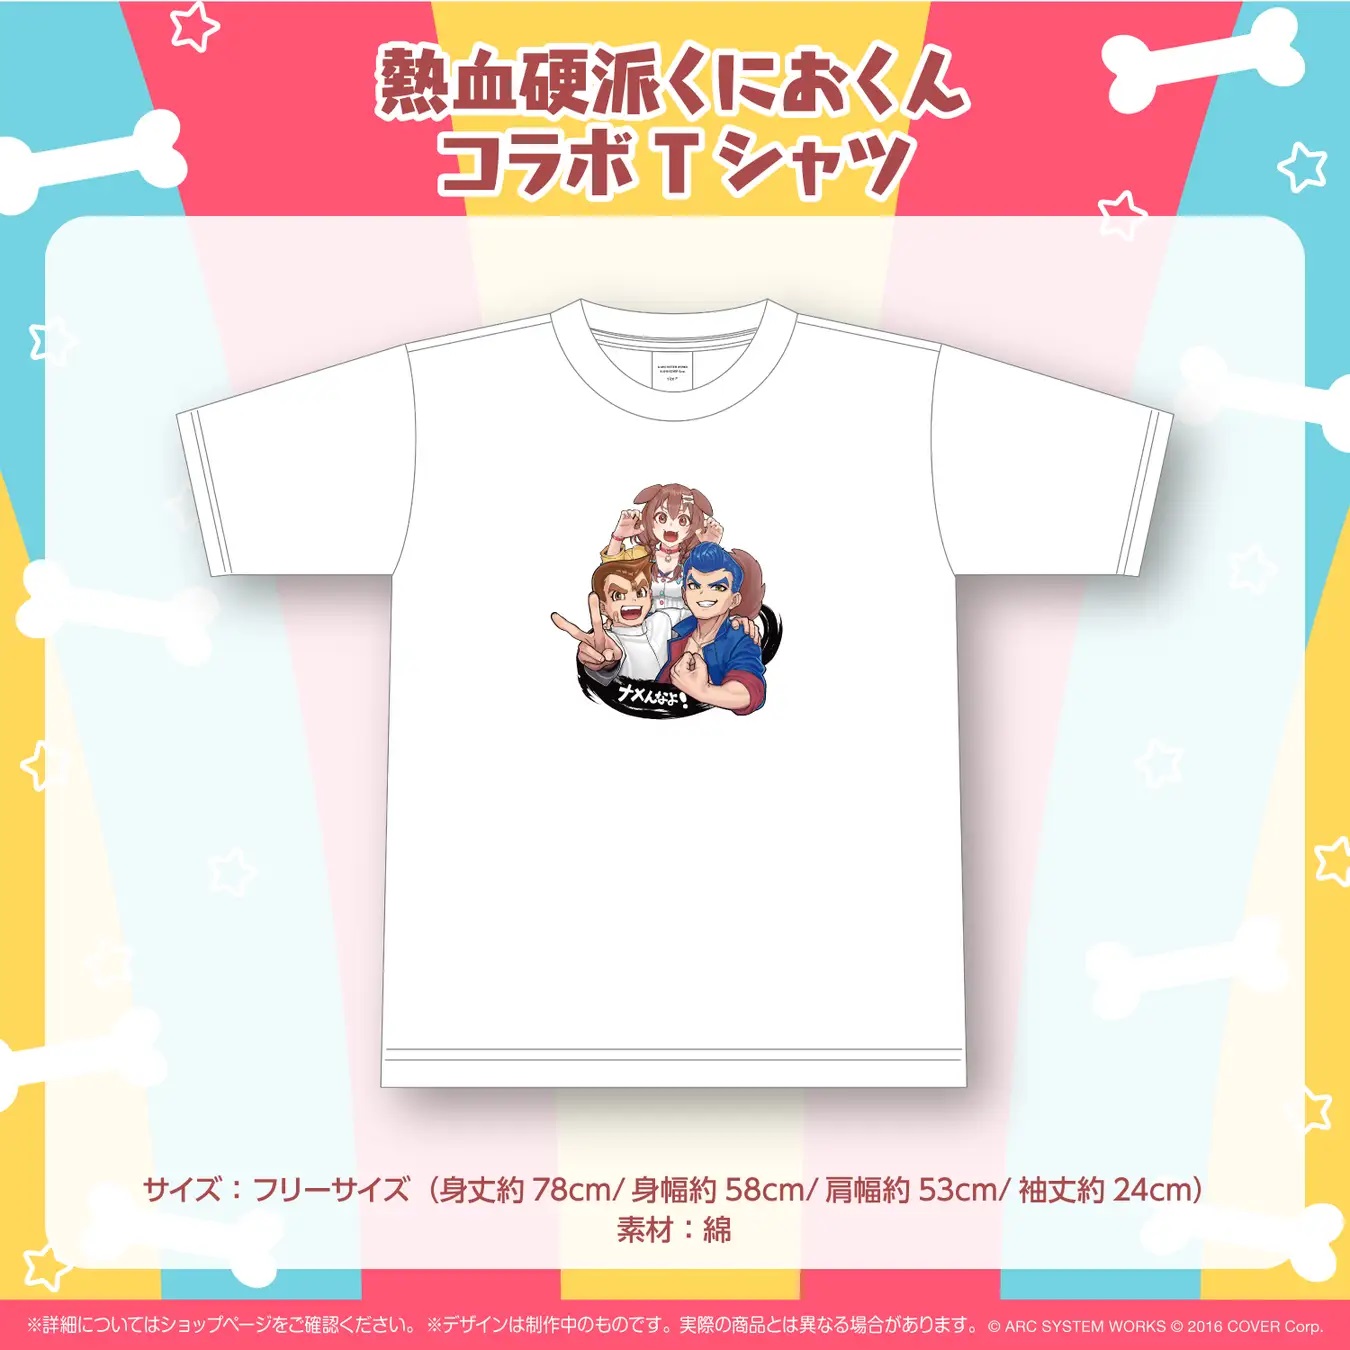 A promotional image of the Inugami Korone x Kunio-kun collaboration T-shirt.